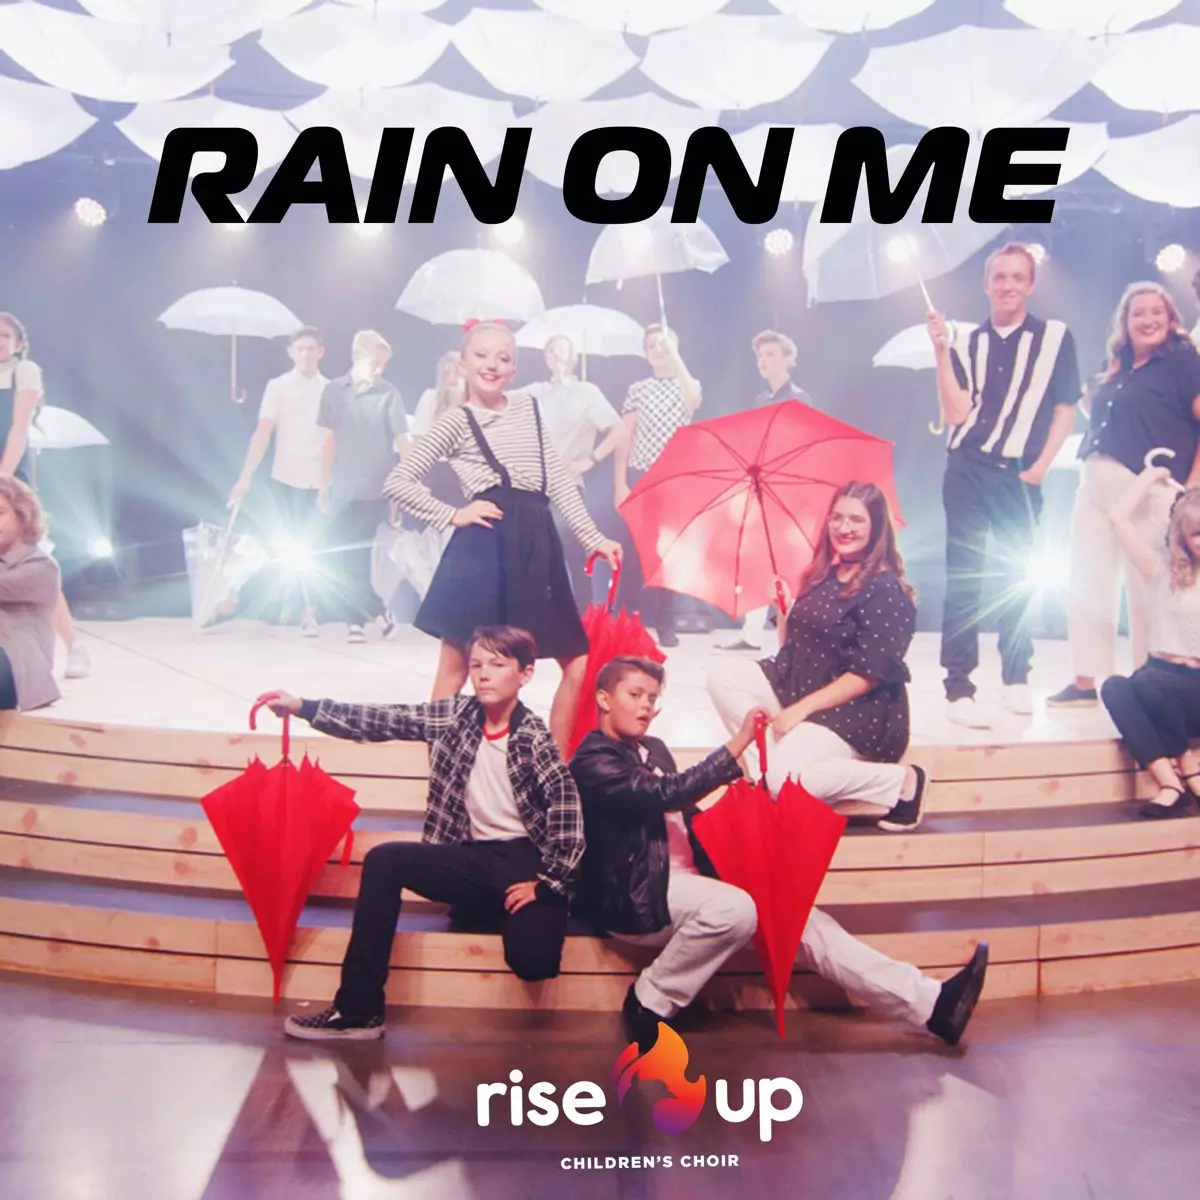 Rain on Me - Single by Rise Up Children's Choir on Apple Music